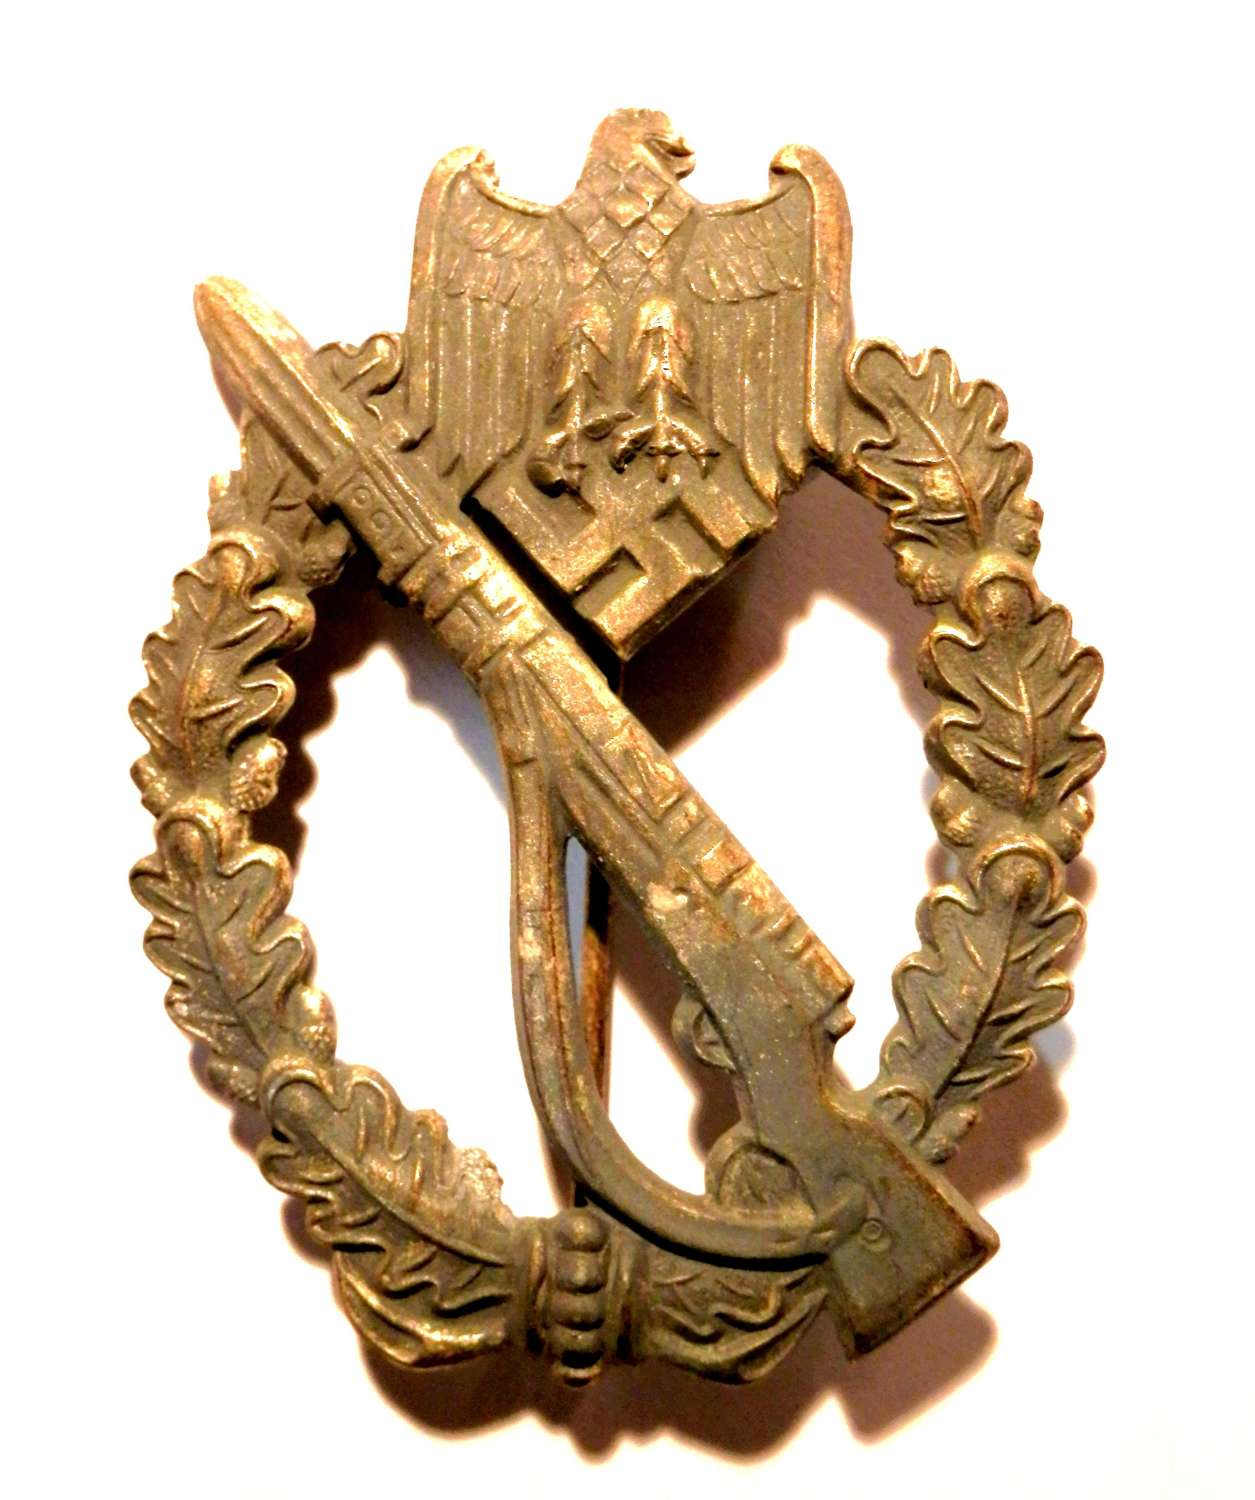 German Infantry Assault Badge. By ‘FCL’, 'Franke & Co/Ludenscheid'.